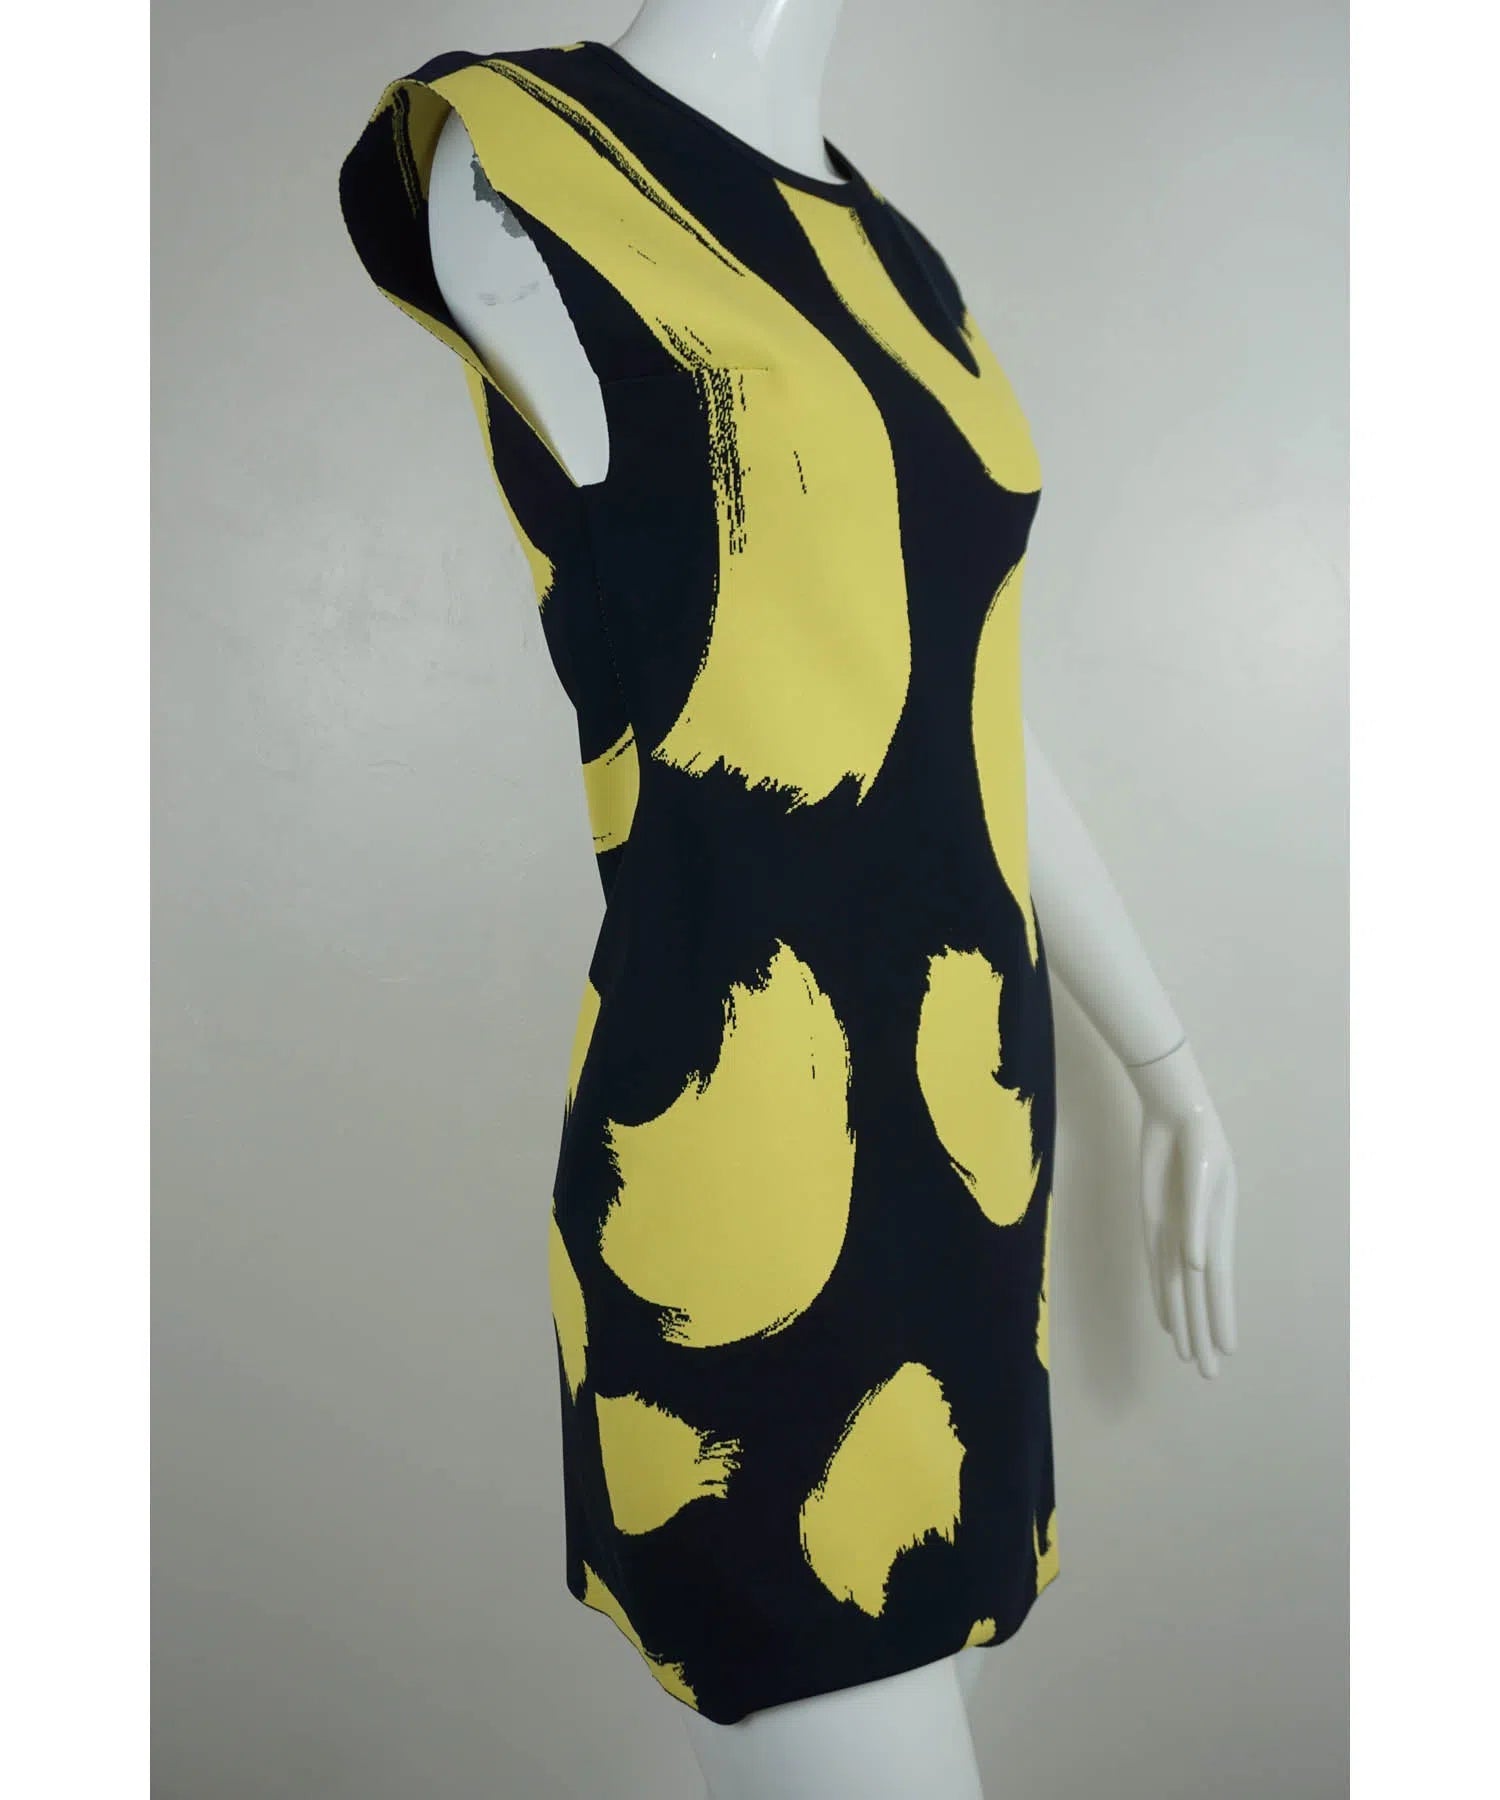 Celine by Phoebe Philo Yellow Brushstroke Dress 2014 Spring